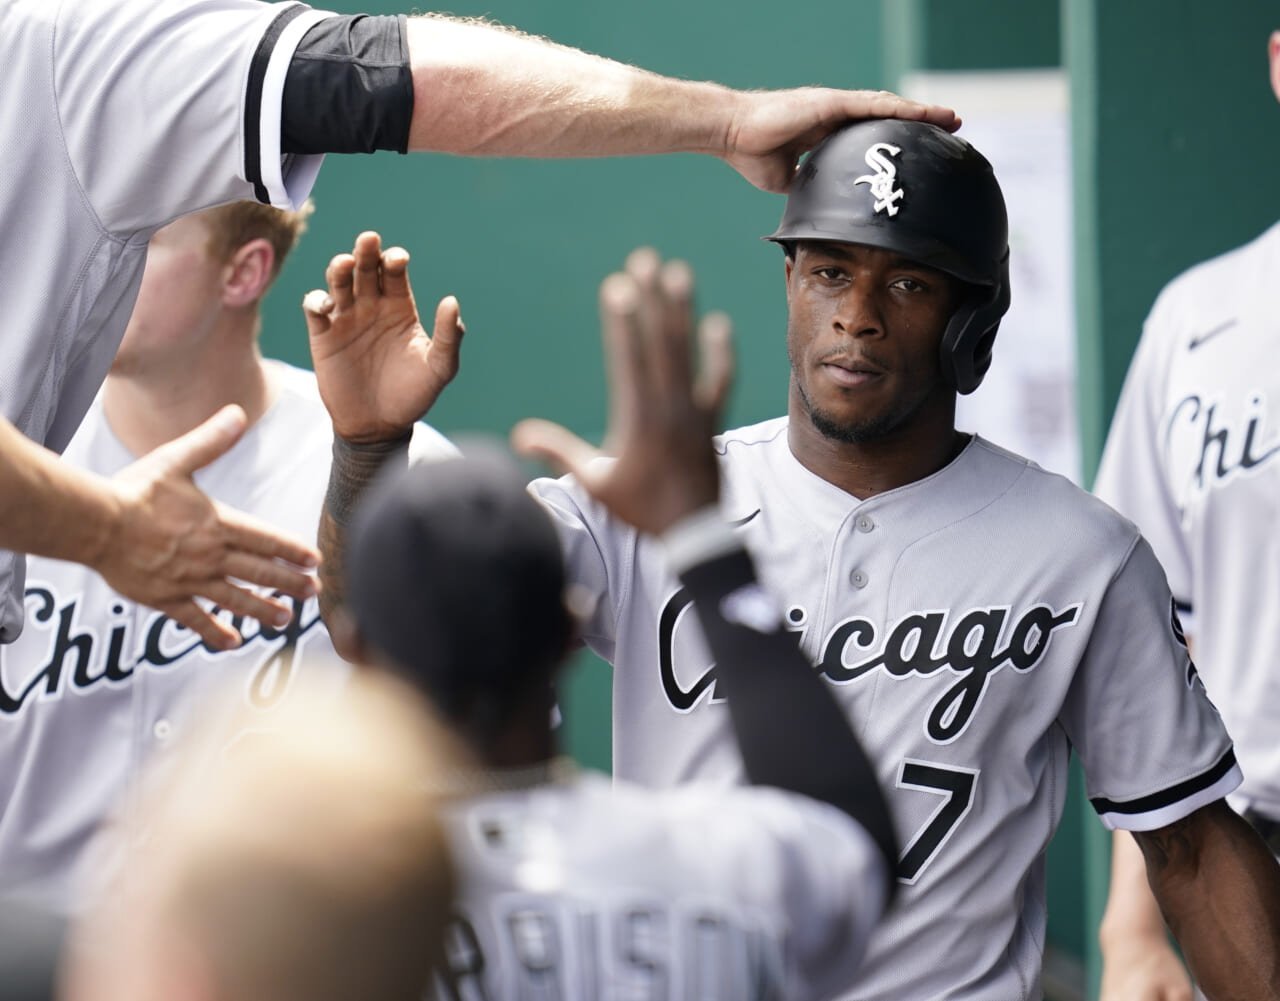 The 'racist' remark rocking Major League Baseball